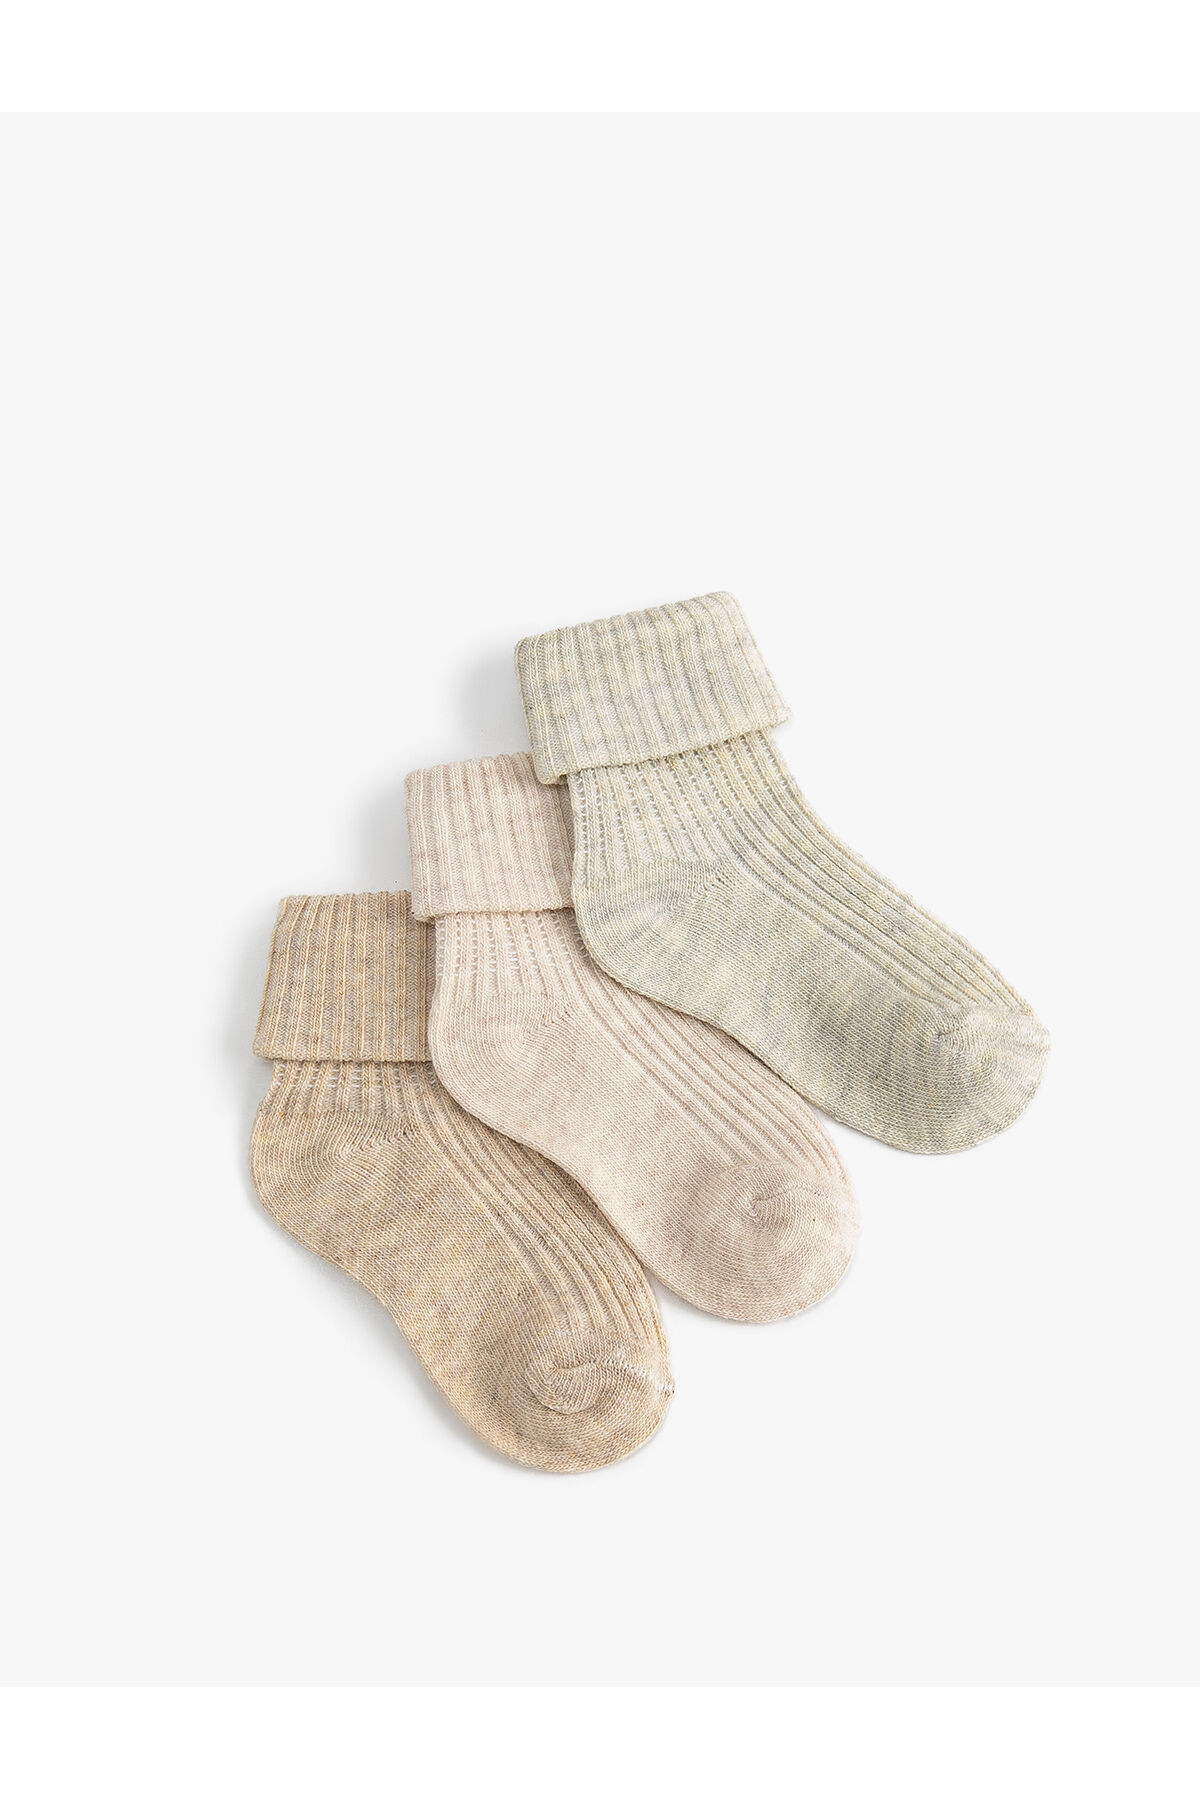 Koton Set of 3 Colorful Socks. Cotton